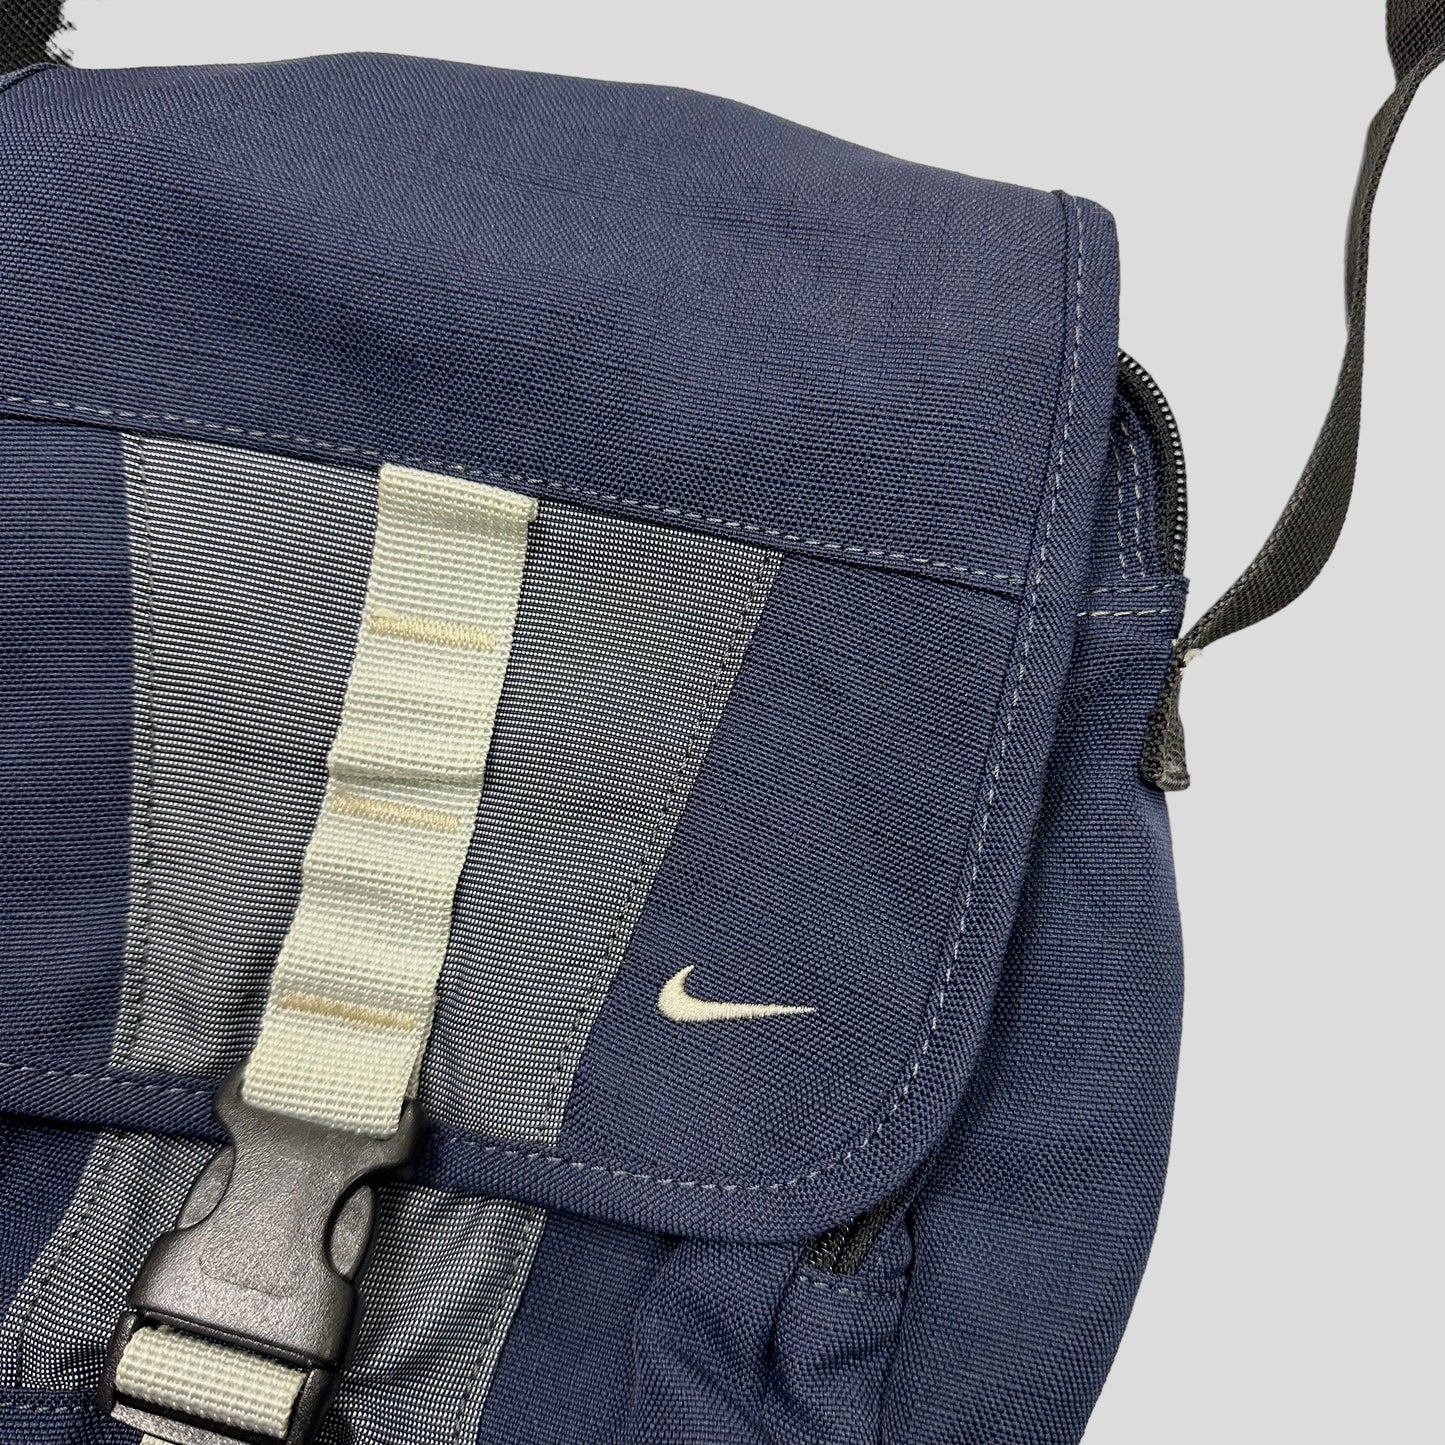 Nike 2003 Ripstop Multipocket Crossbody Bag